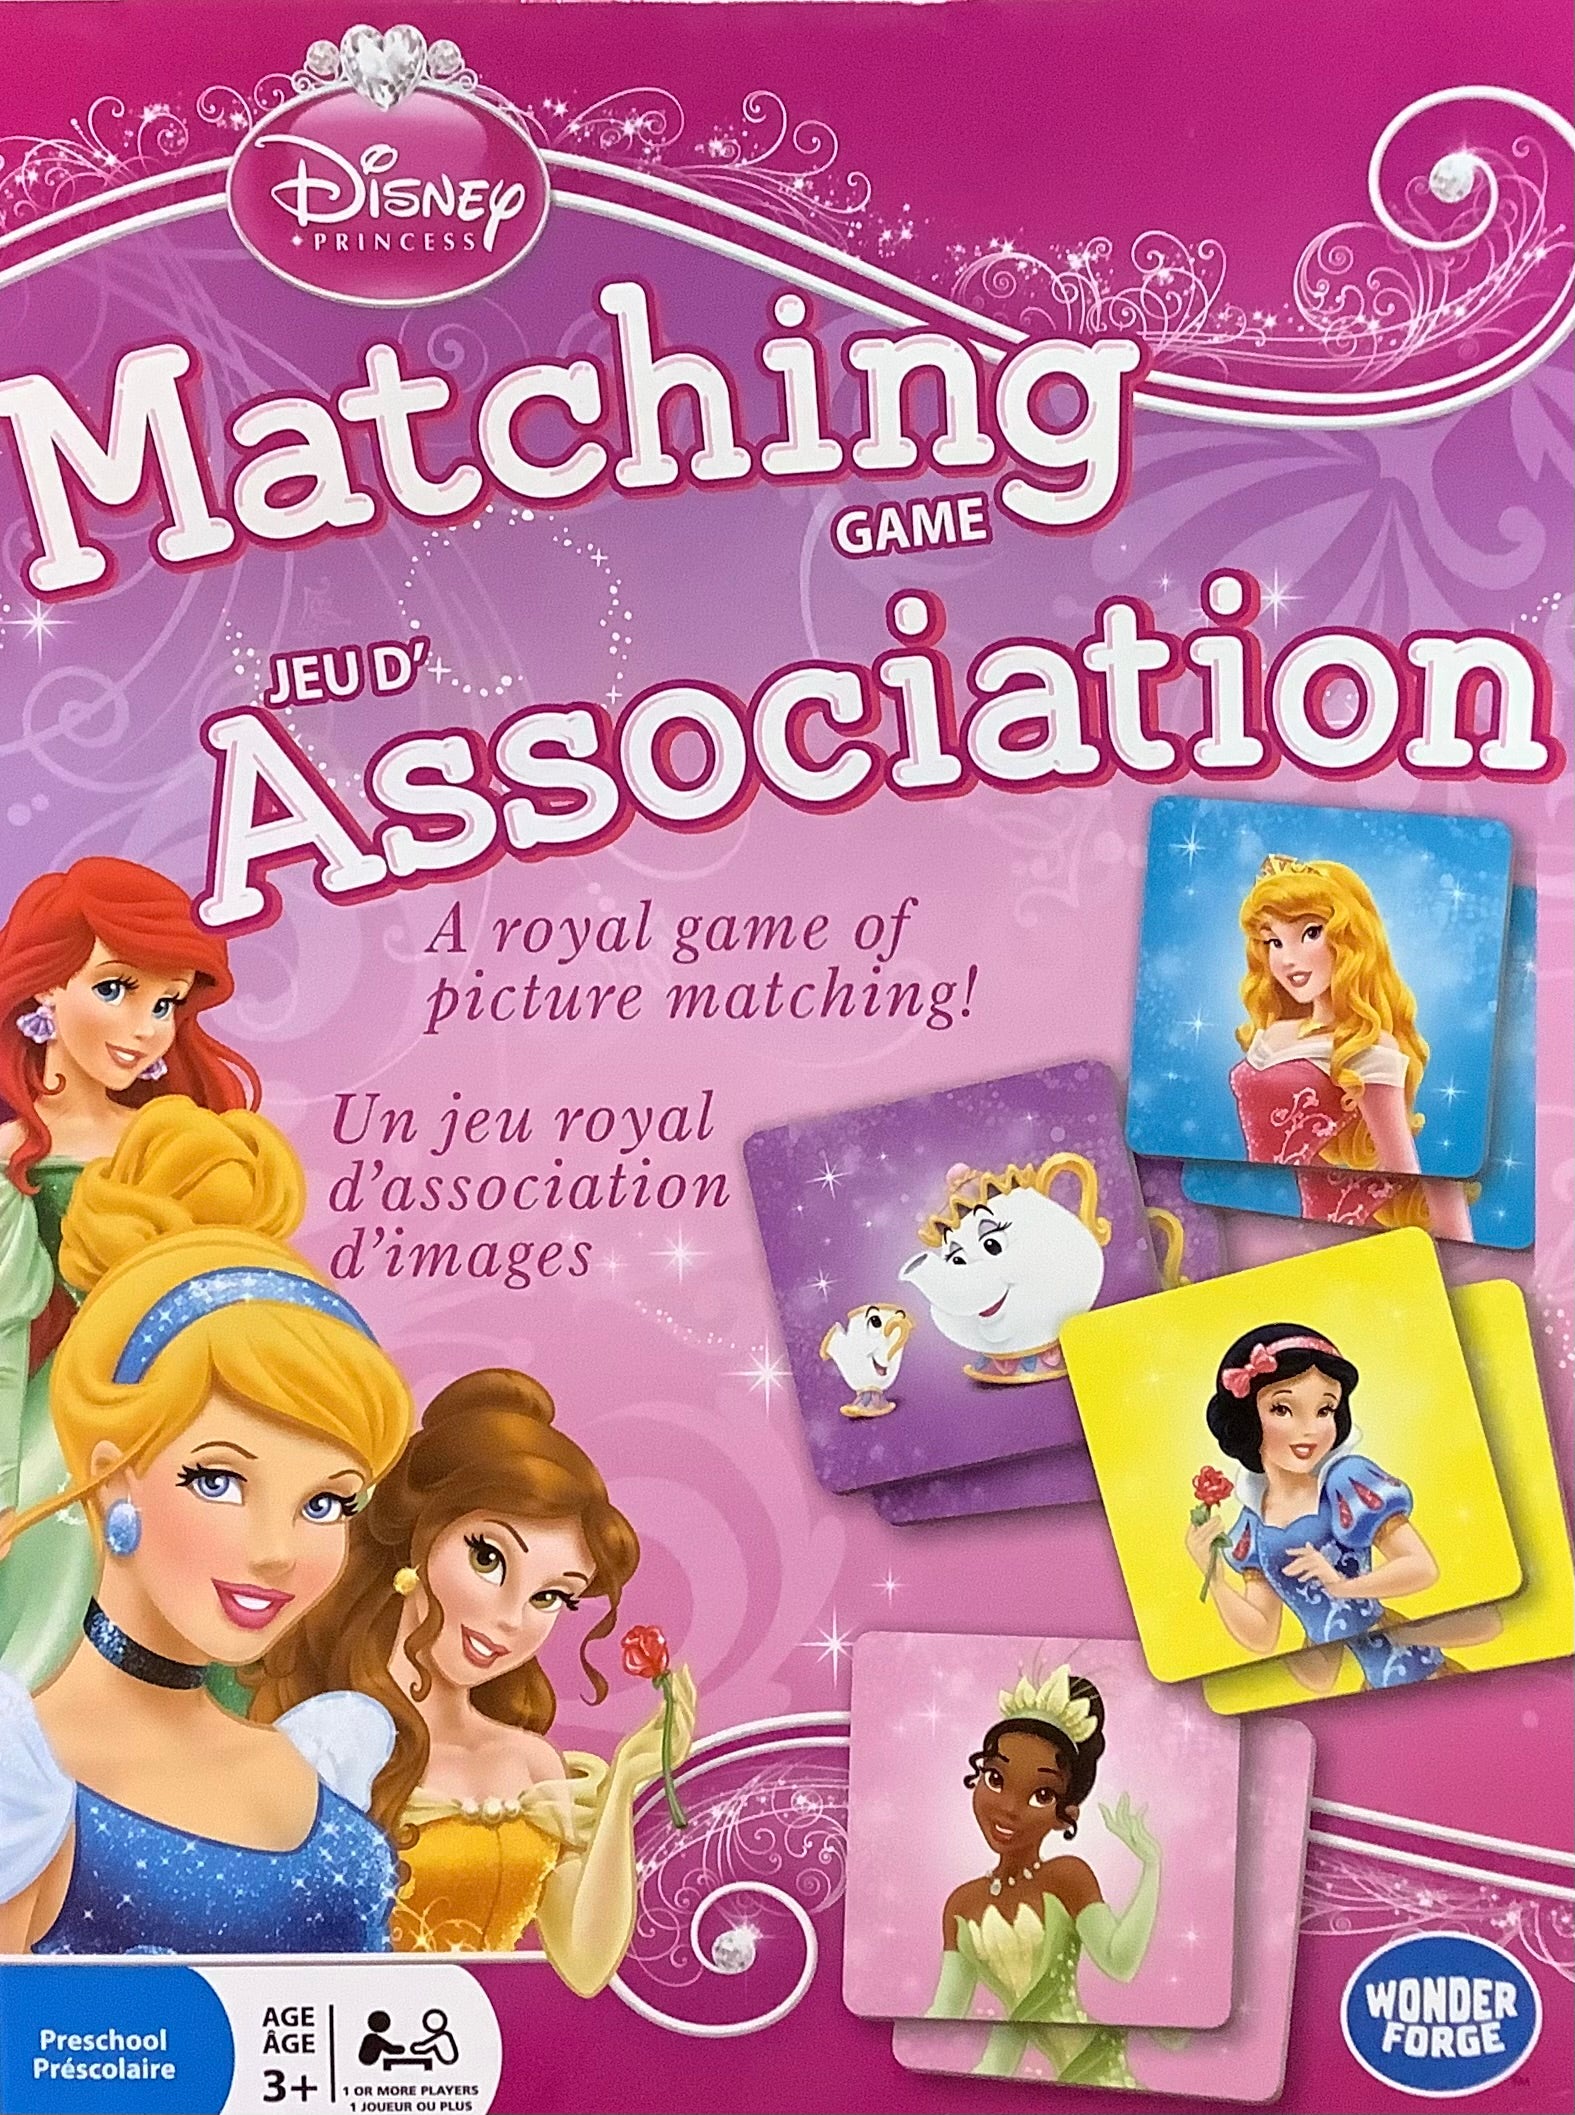 Disney Princess Matching Game by Wonder Forge #60001290